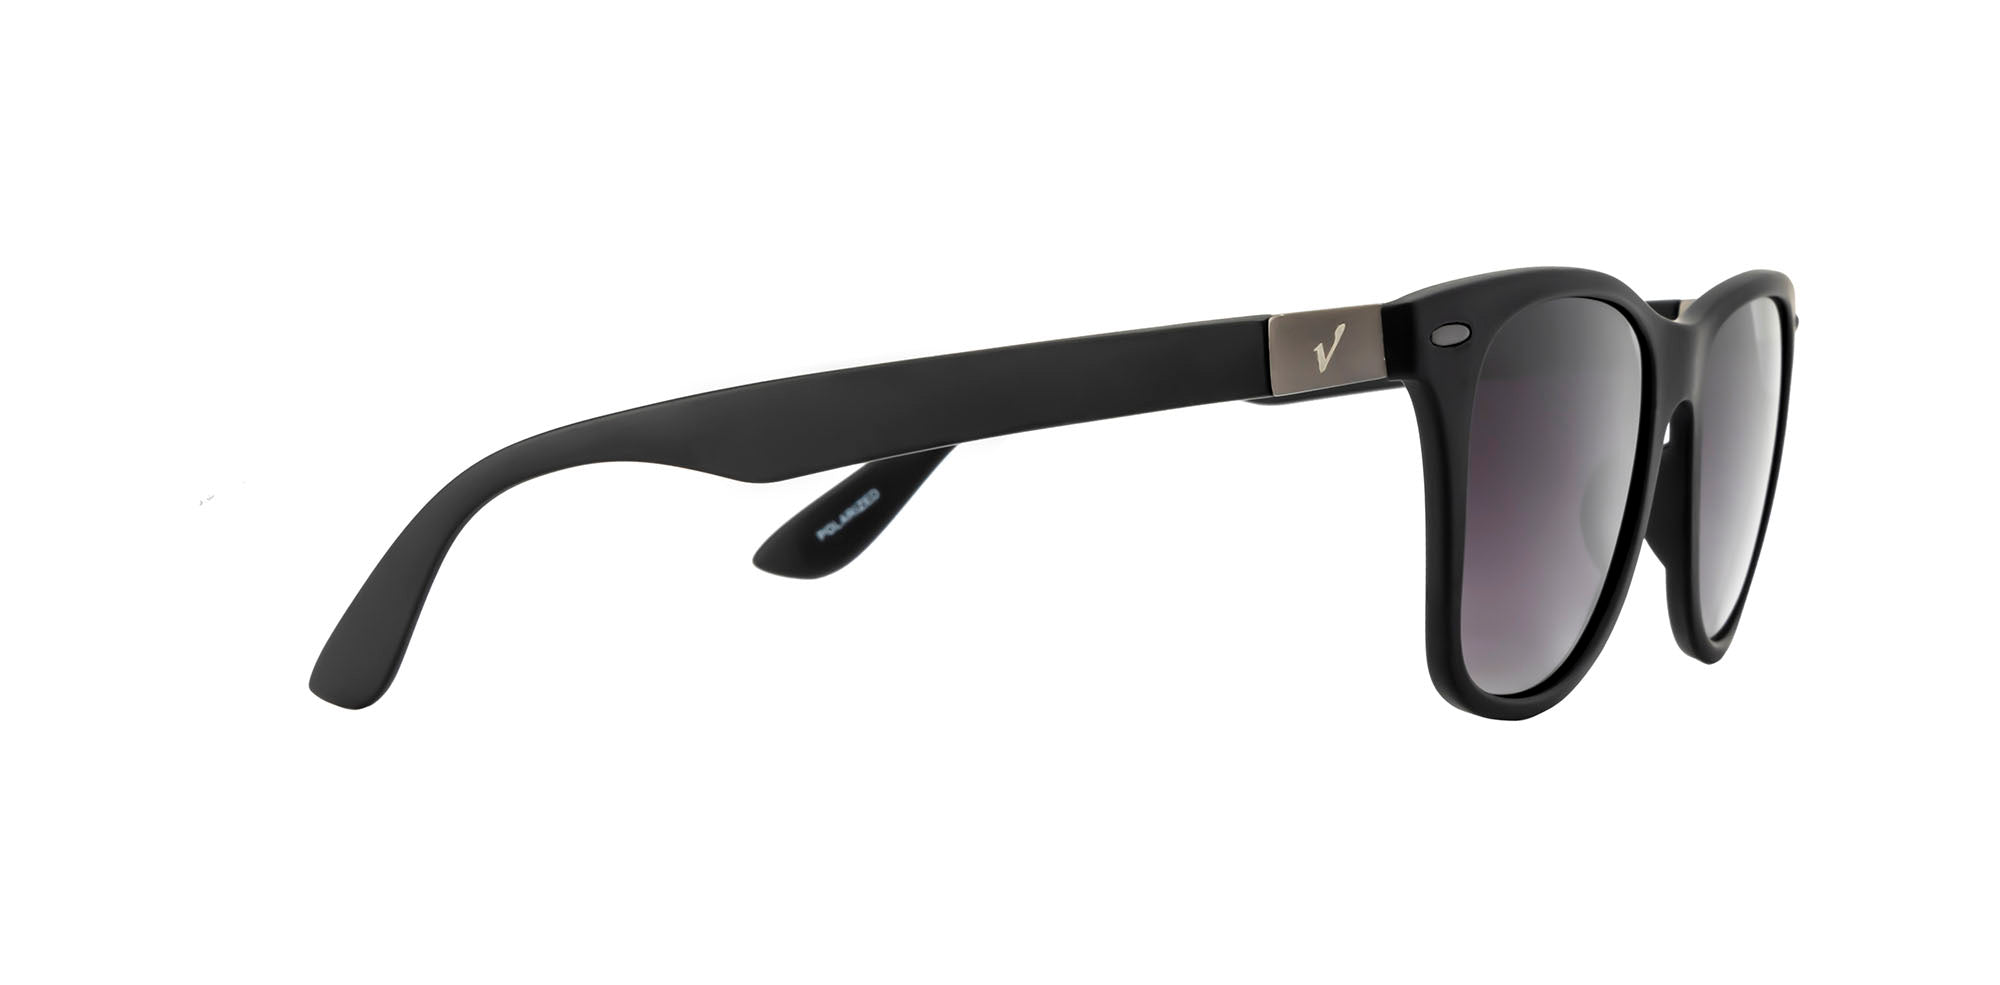 Velocity Polarized Sunglasses 1960 Sunglass